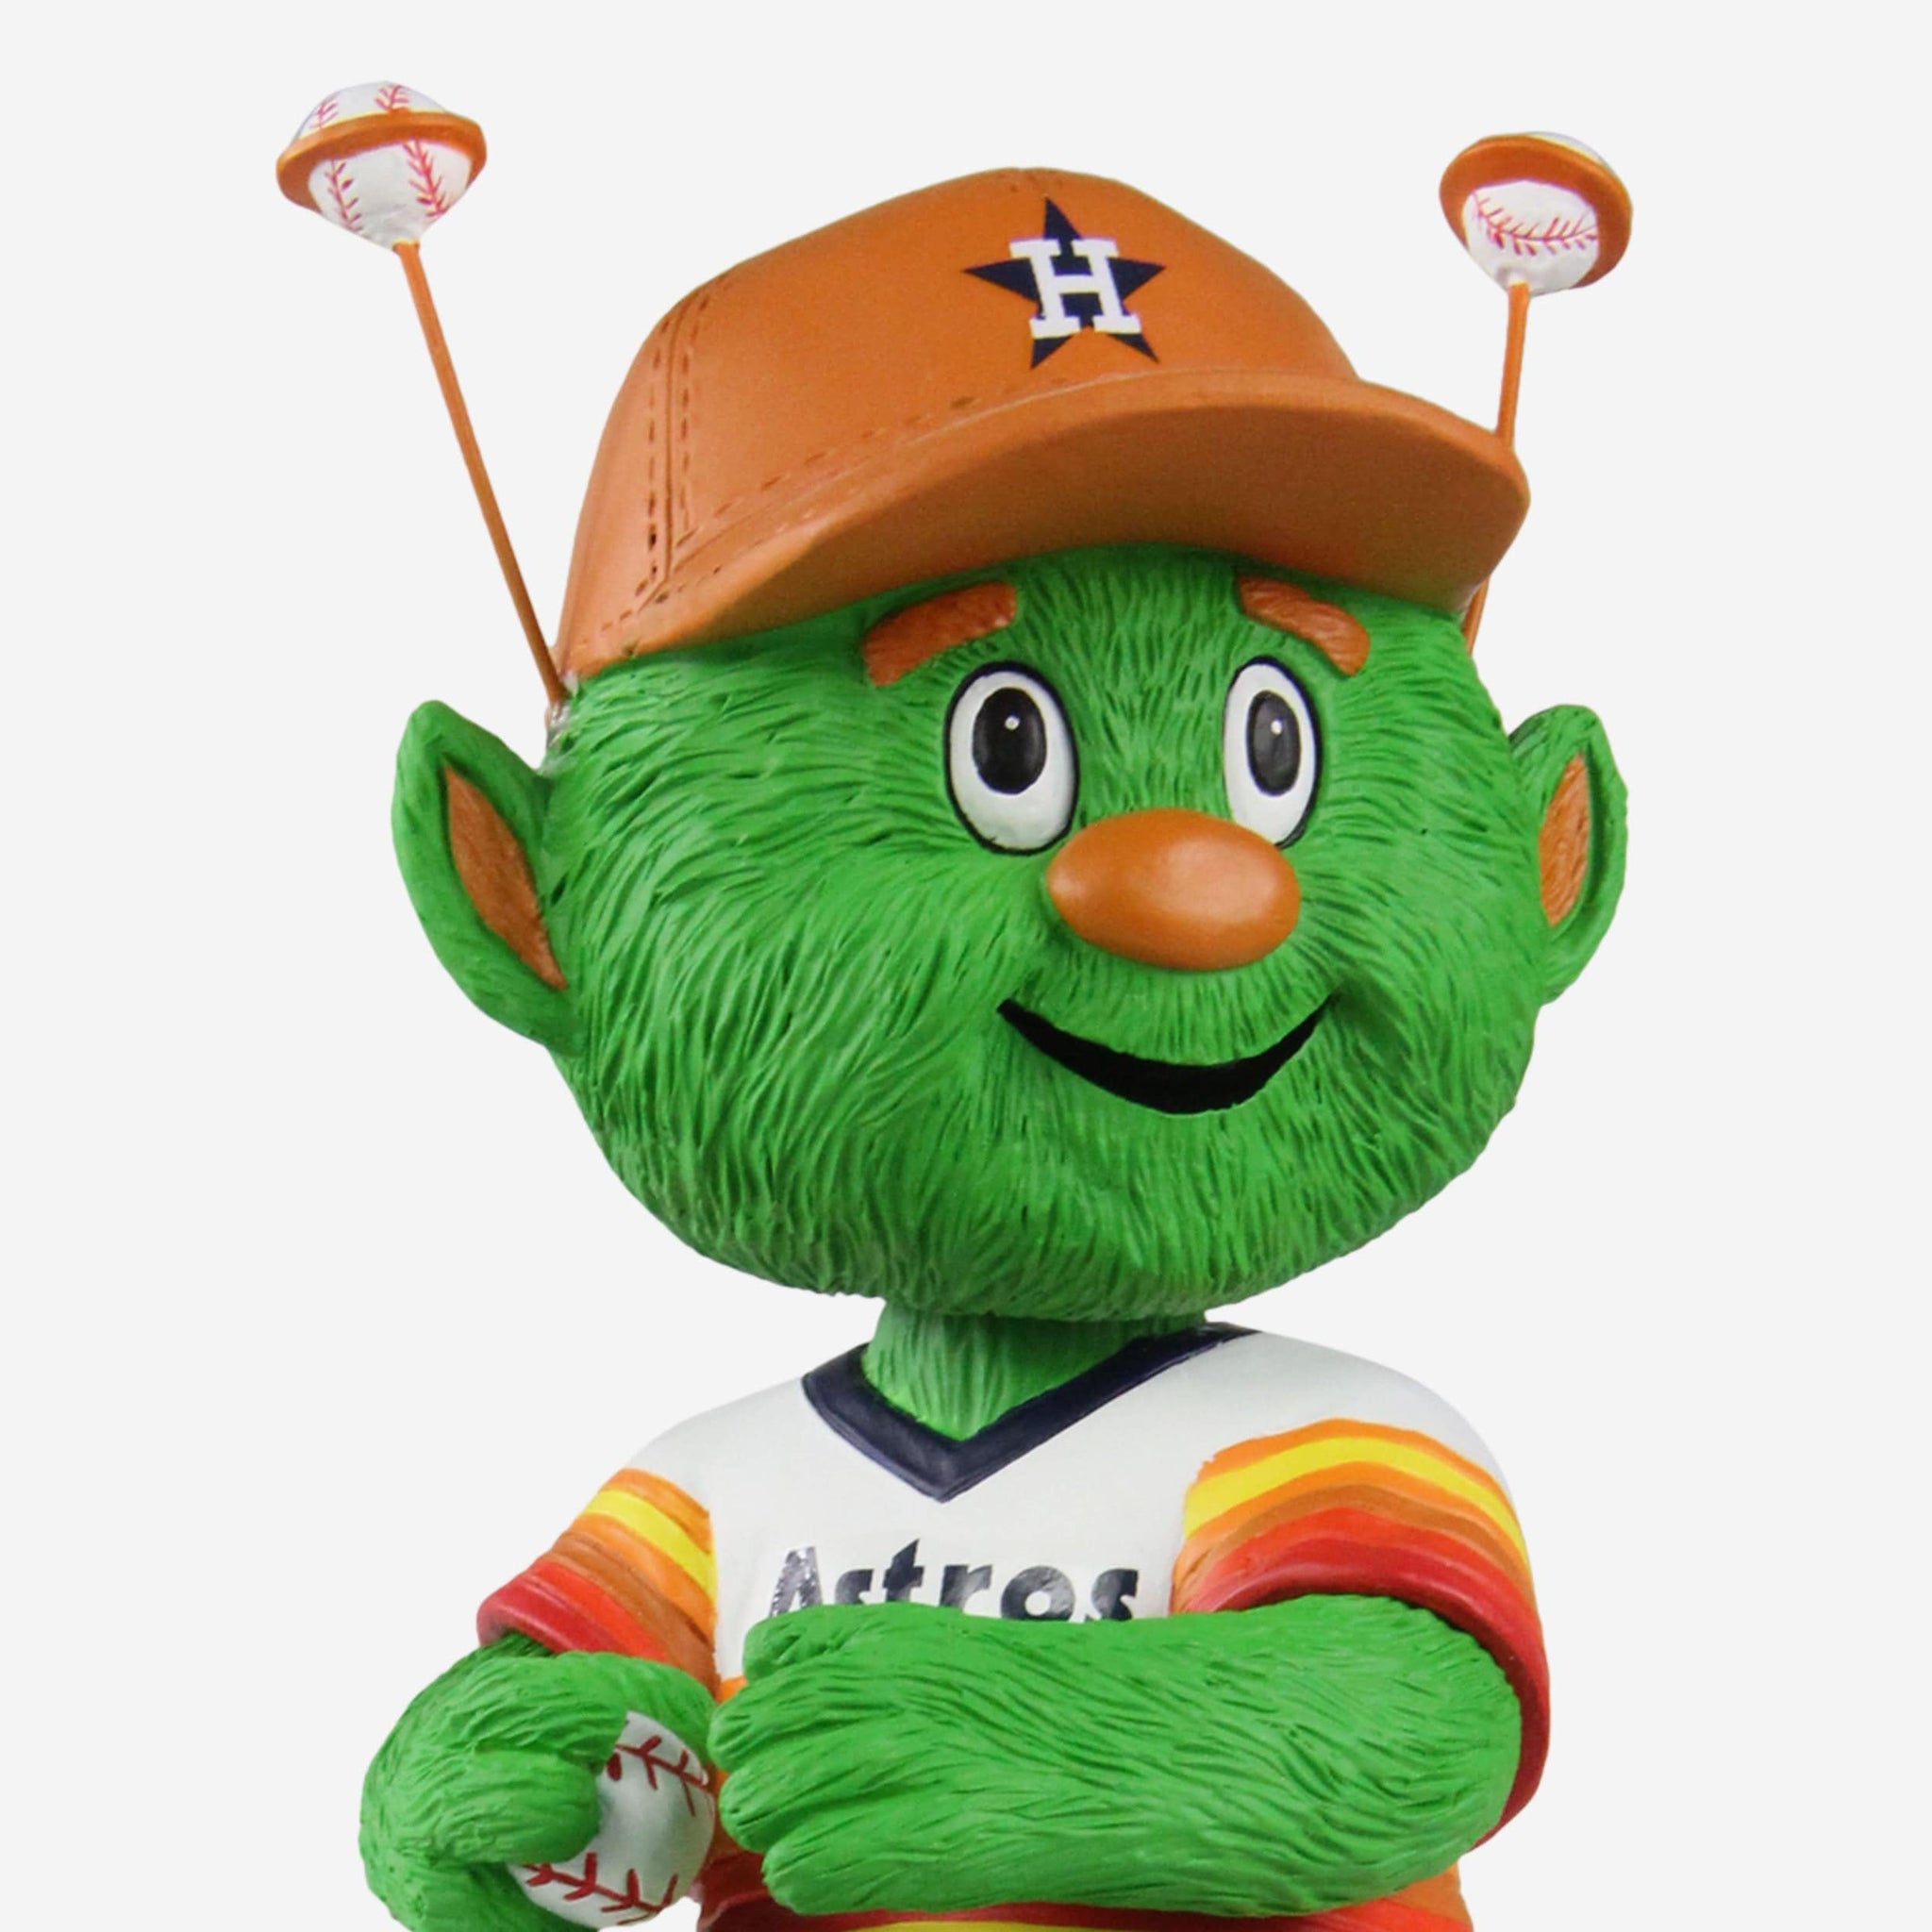 Orbit Houston Astros 3000 Hits Mascot Bobblehead FOCO